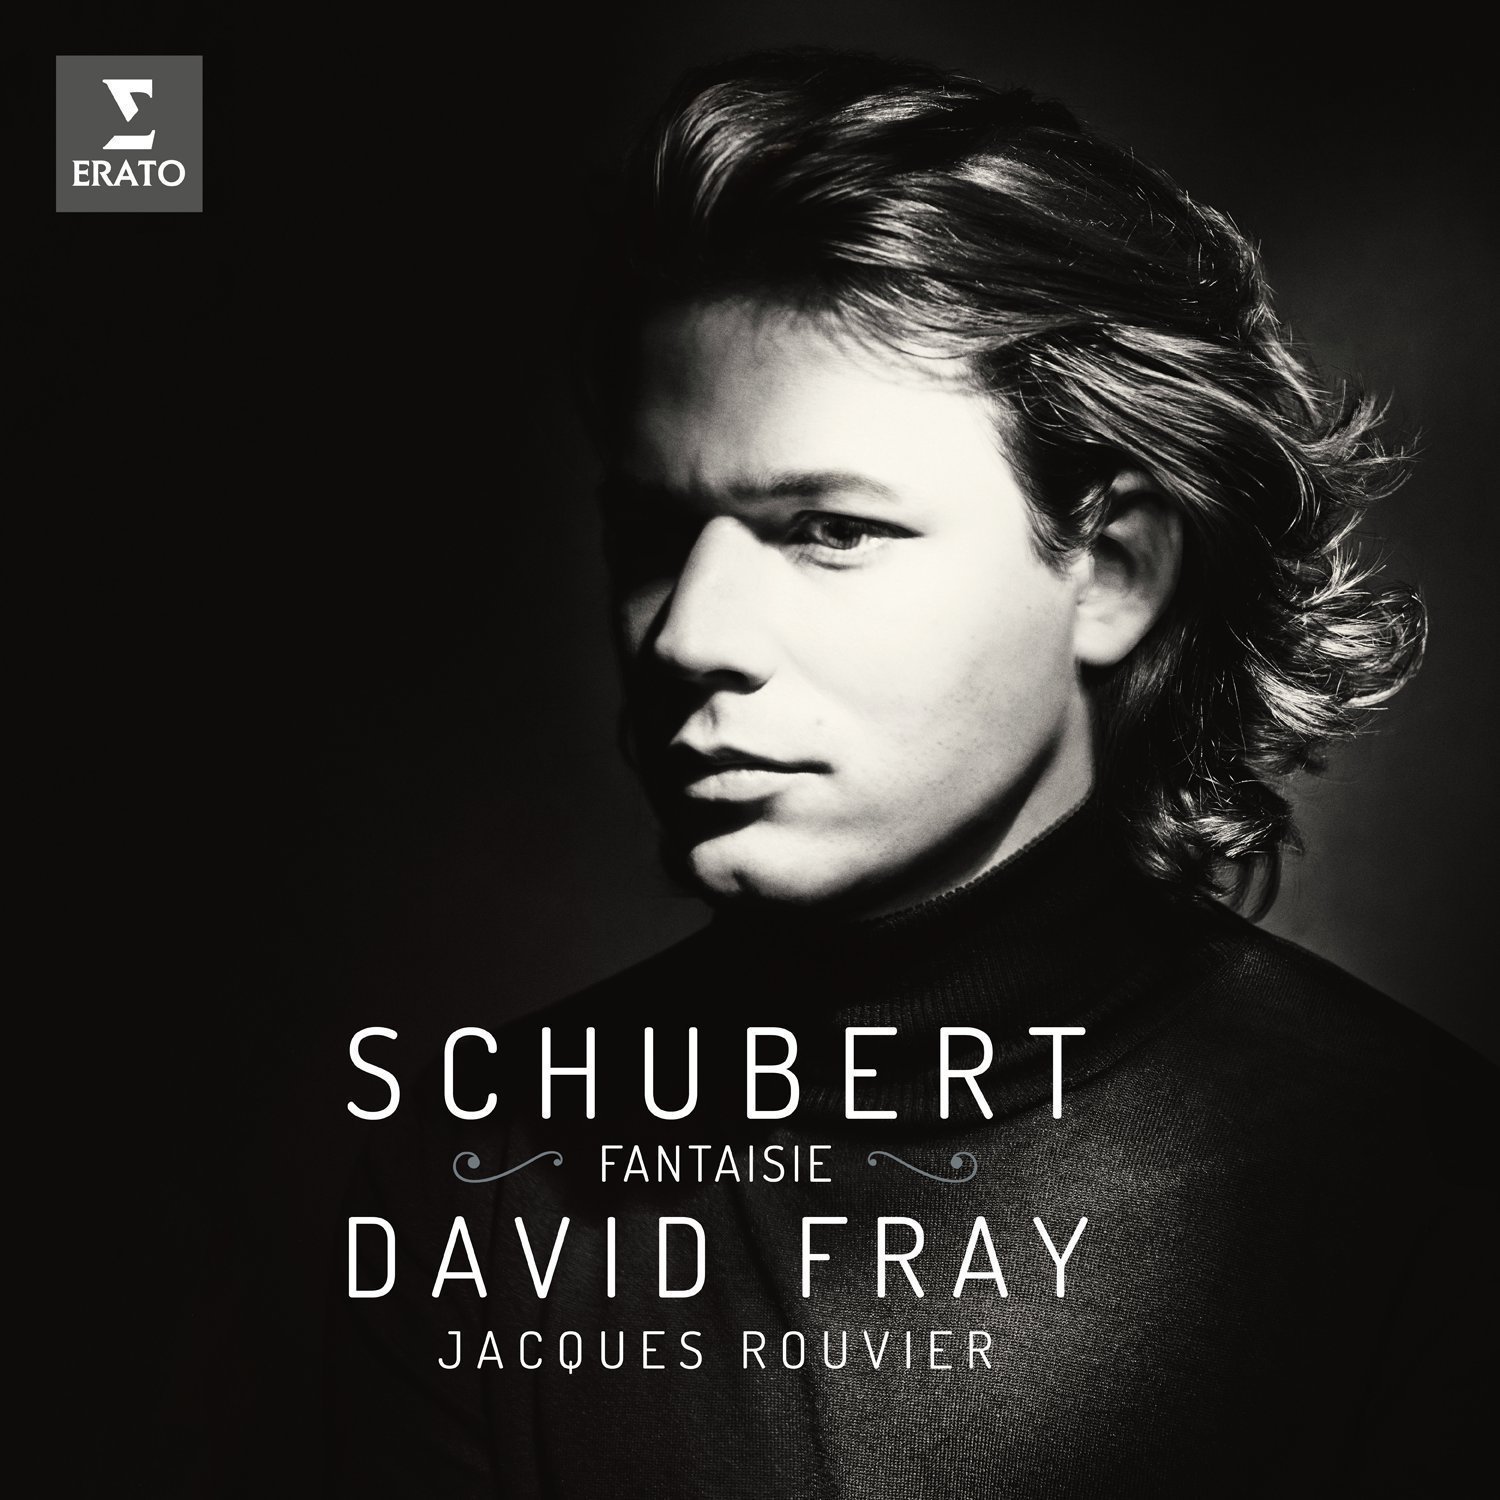 David Fray – Schubert: Fantaisie (2015) [HighResAudio FLAC 24bit/96kHz]